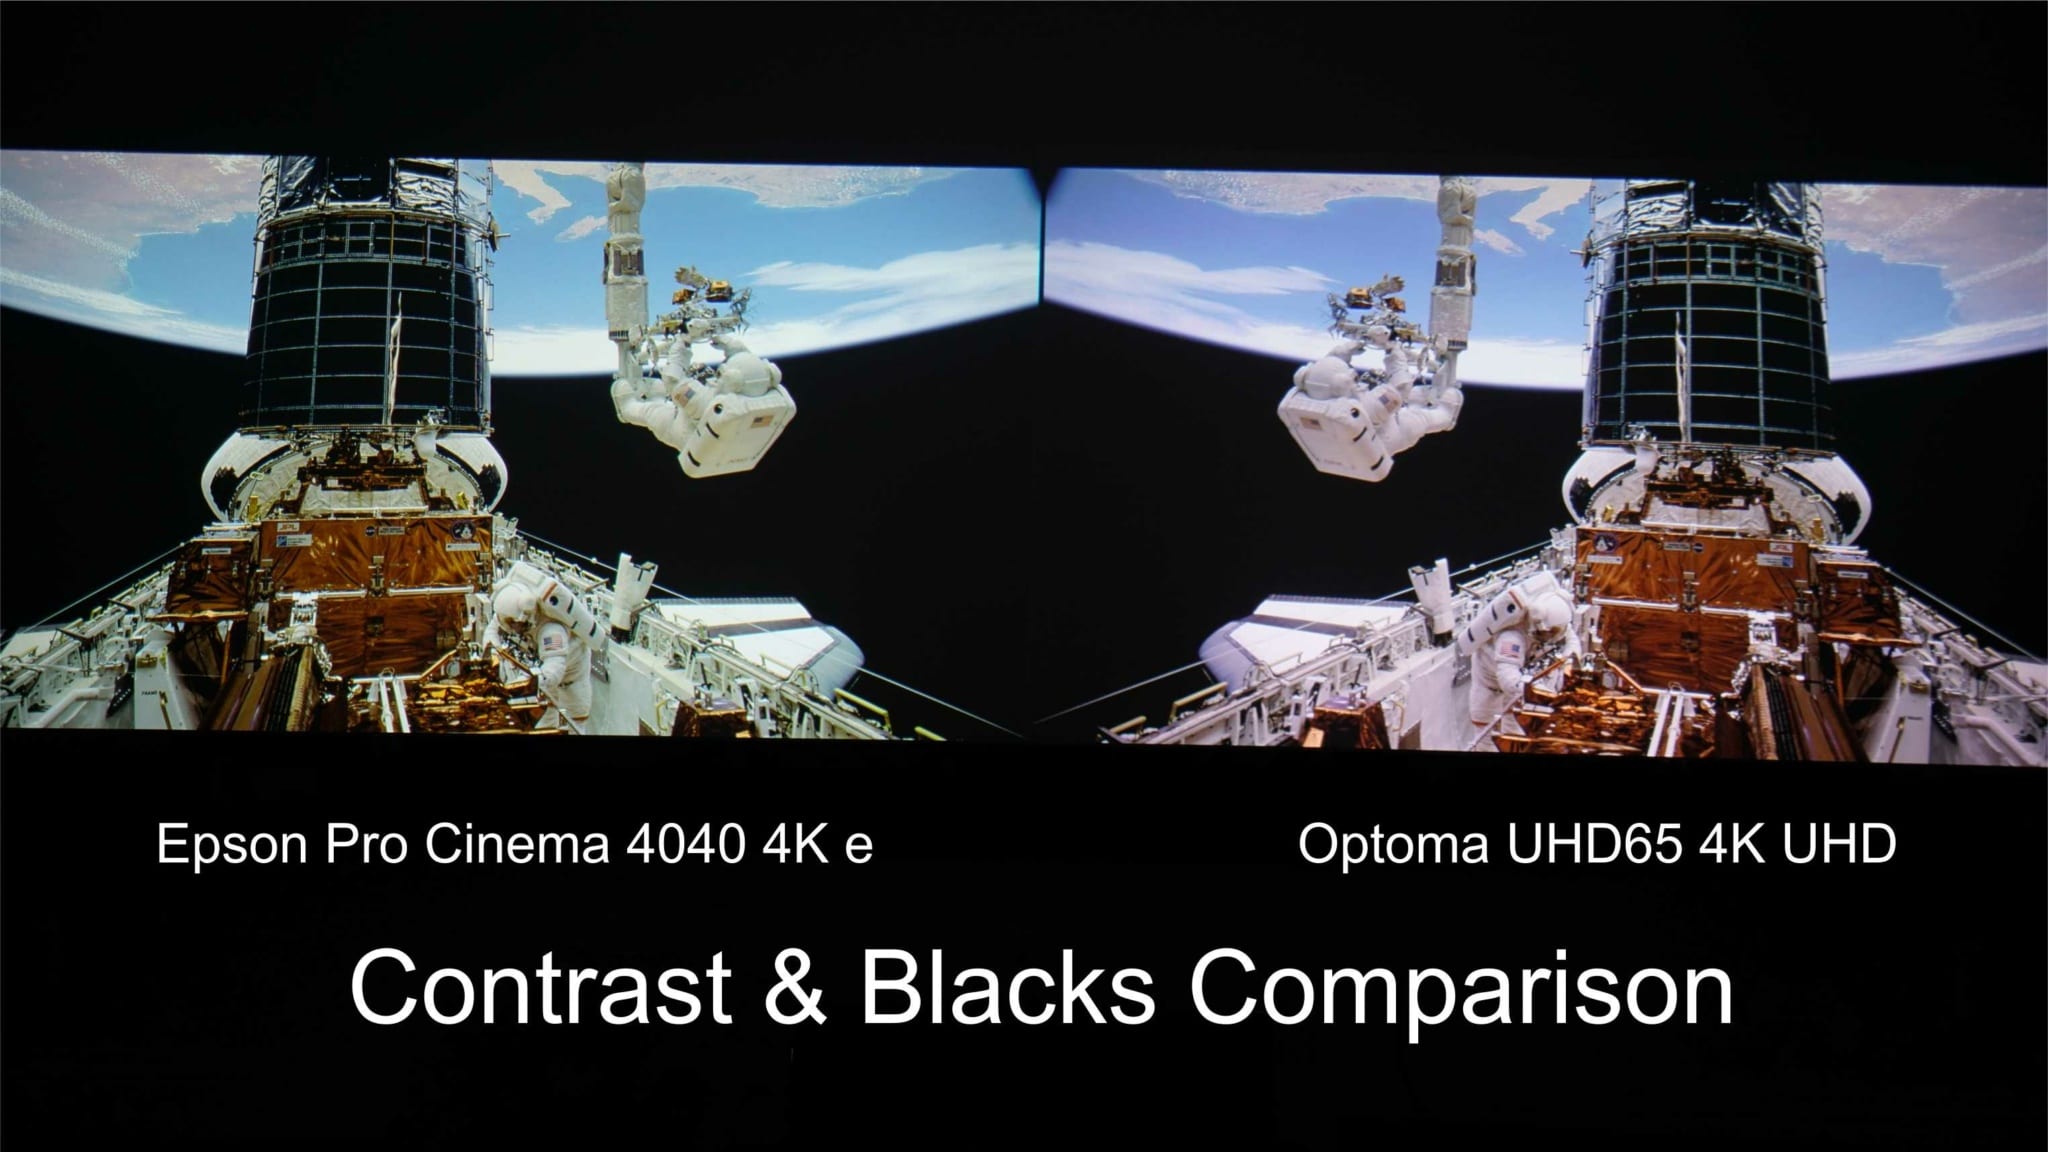 "Sony VPL-VW365ES vs Epson Pro Cinema 4040: Contrast &amp; Blacks Comparison